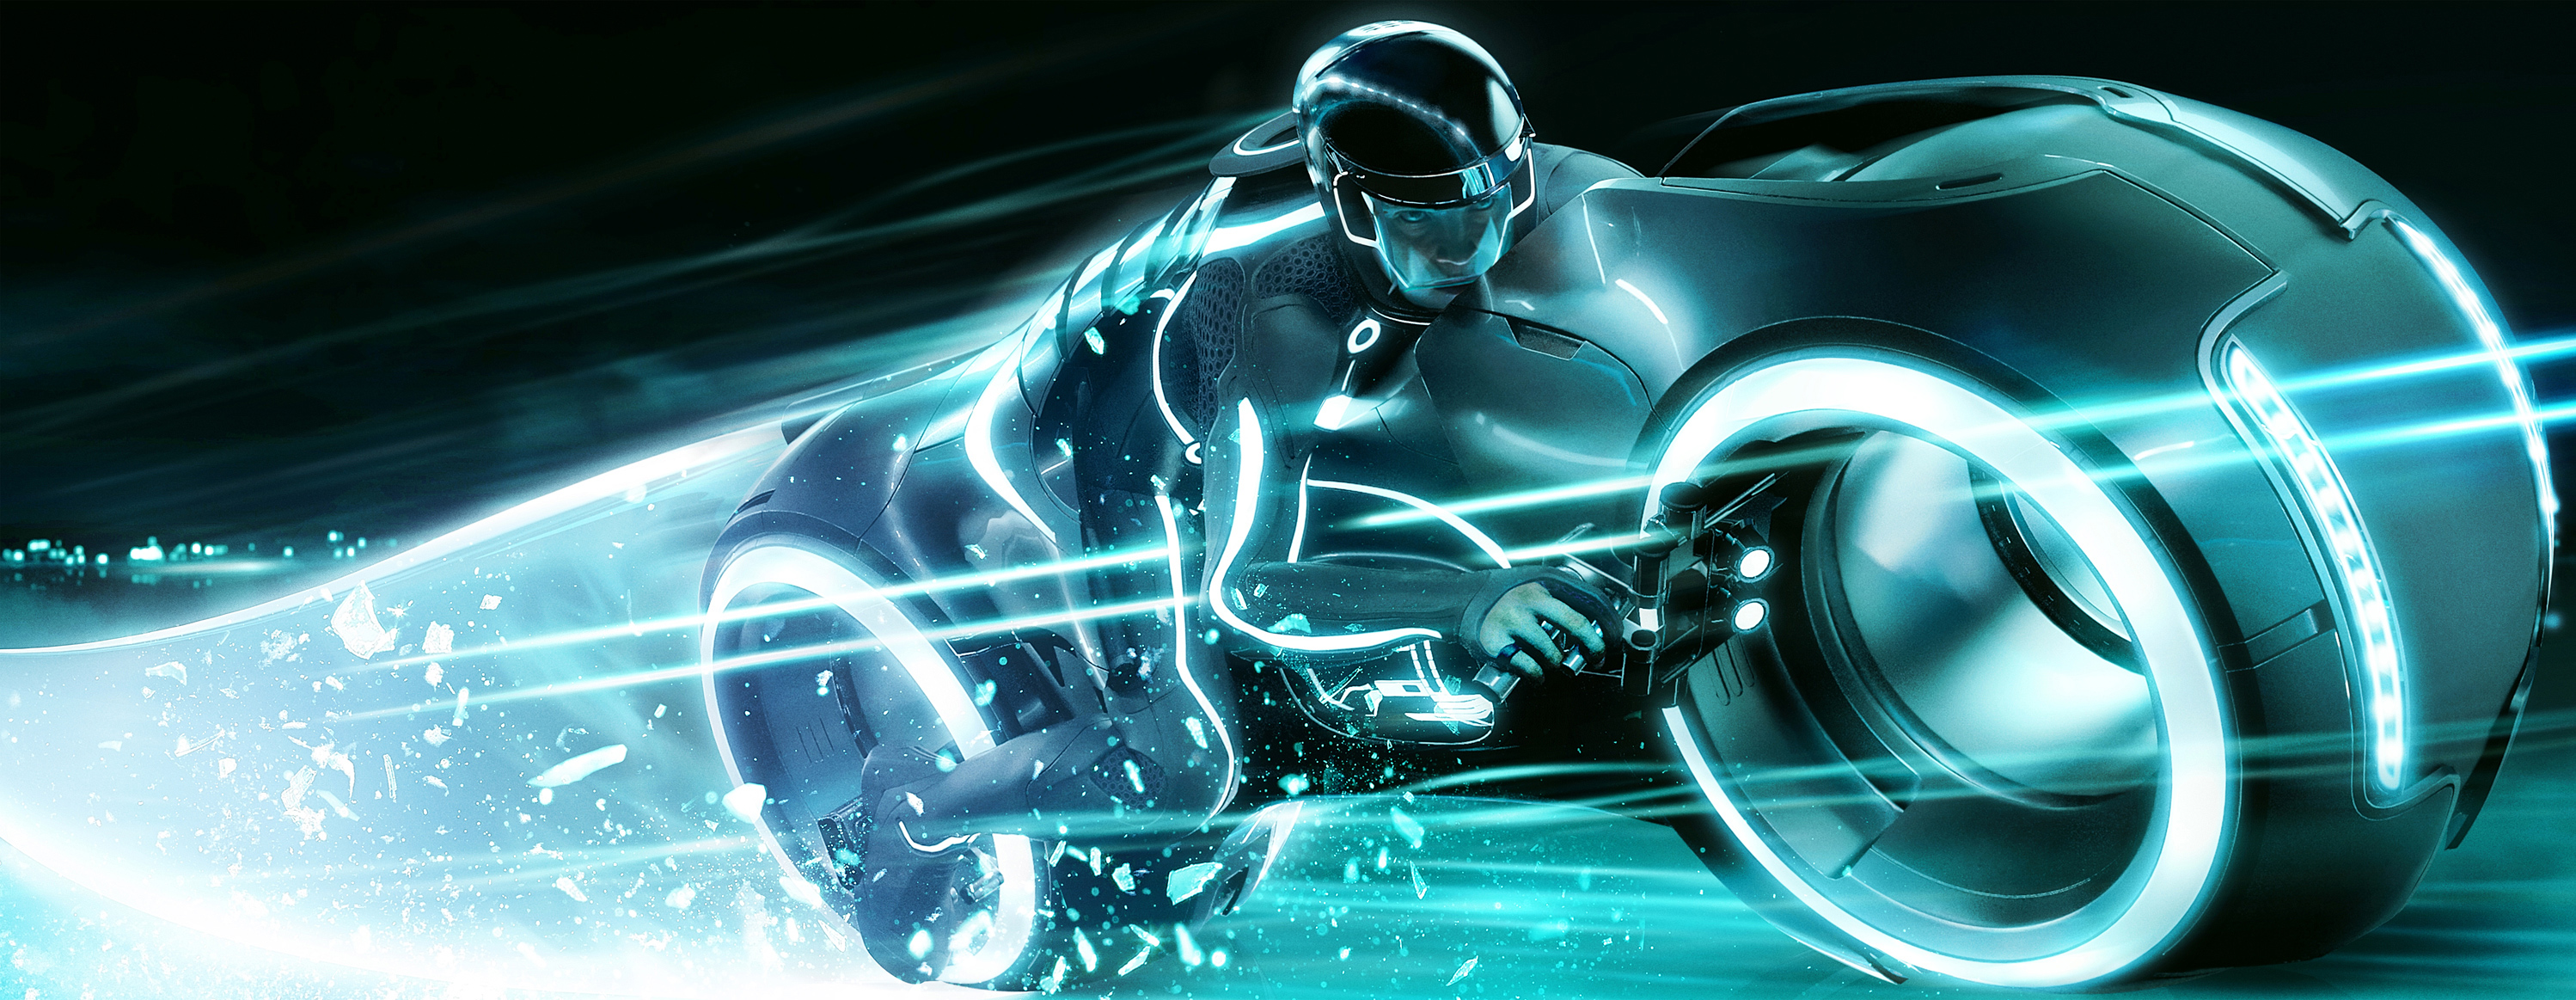 Speeding Light Cycle From Tron Legacy Desktop Wallpaper